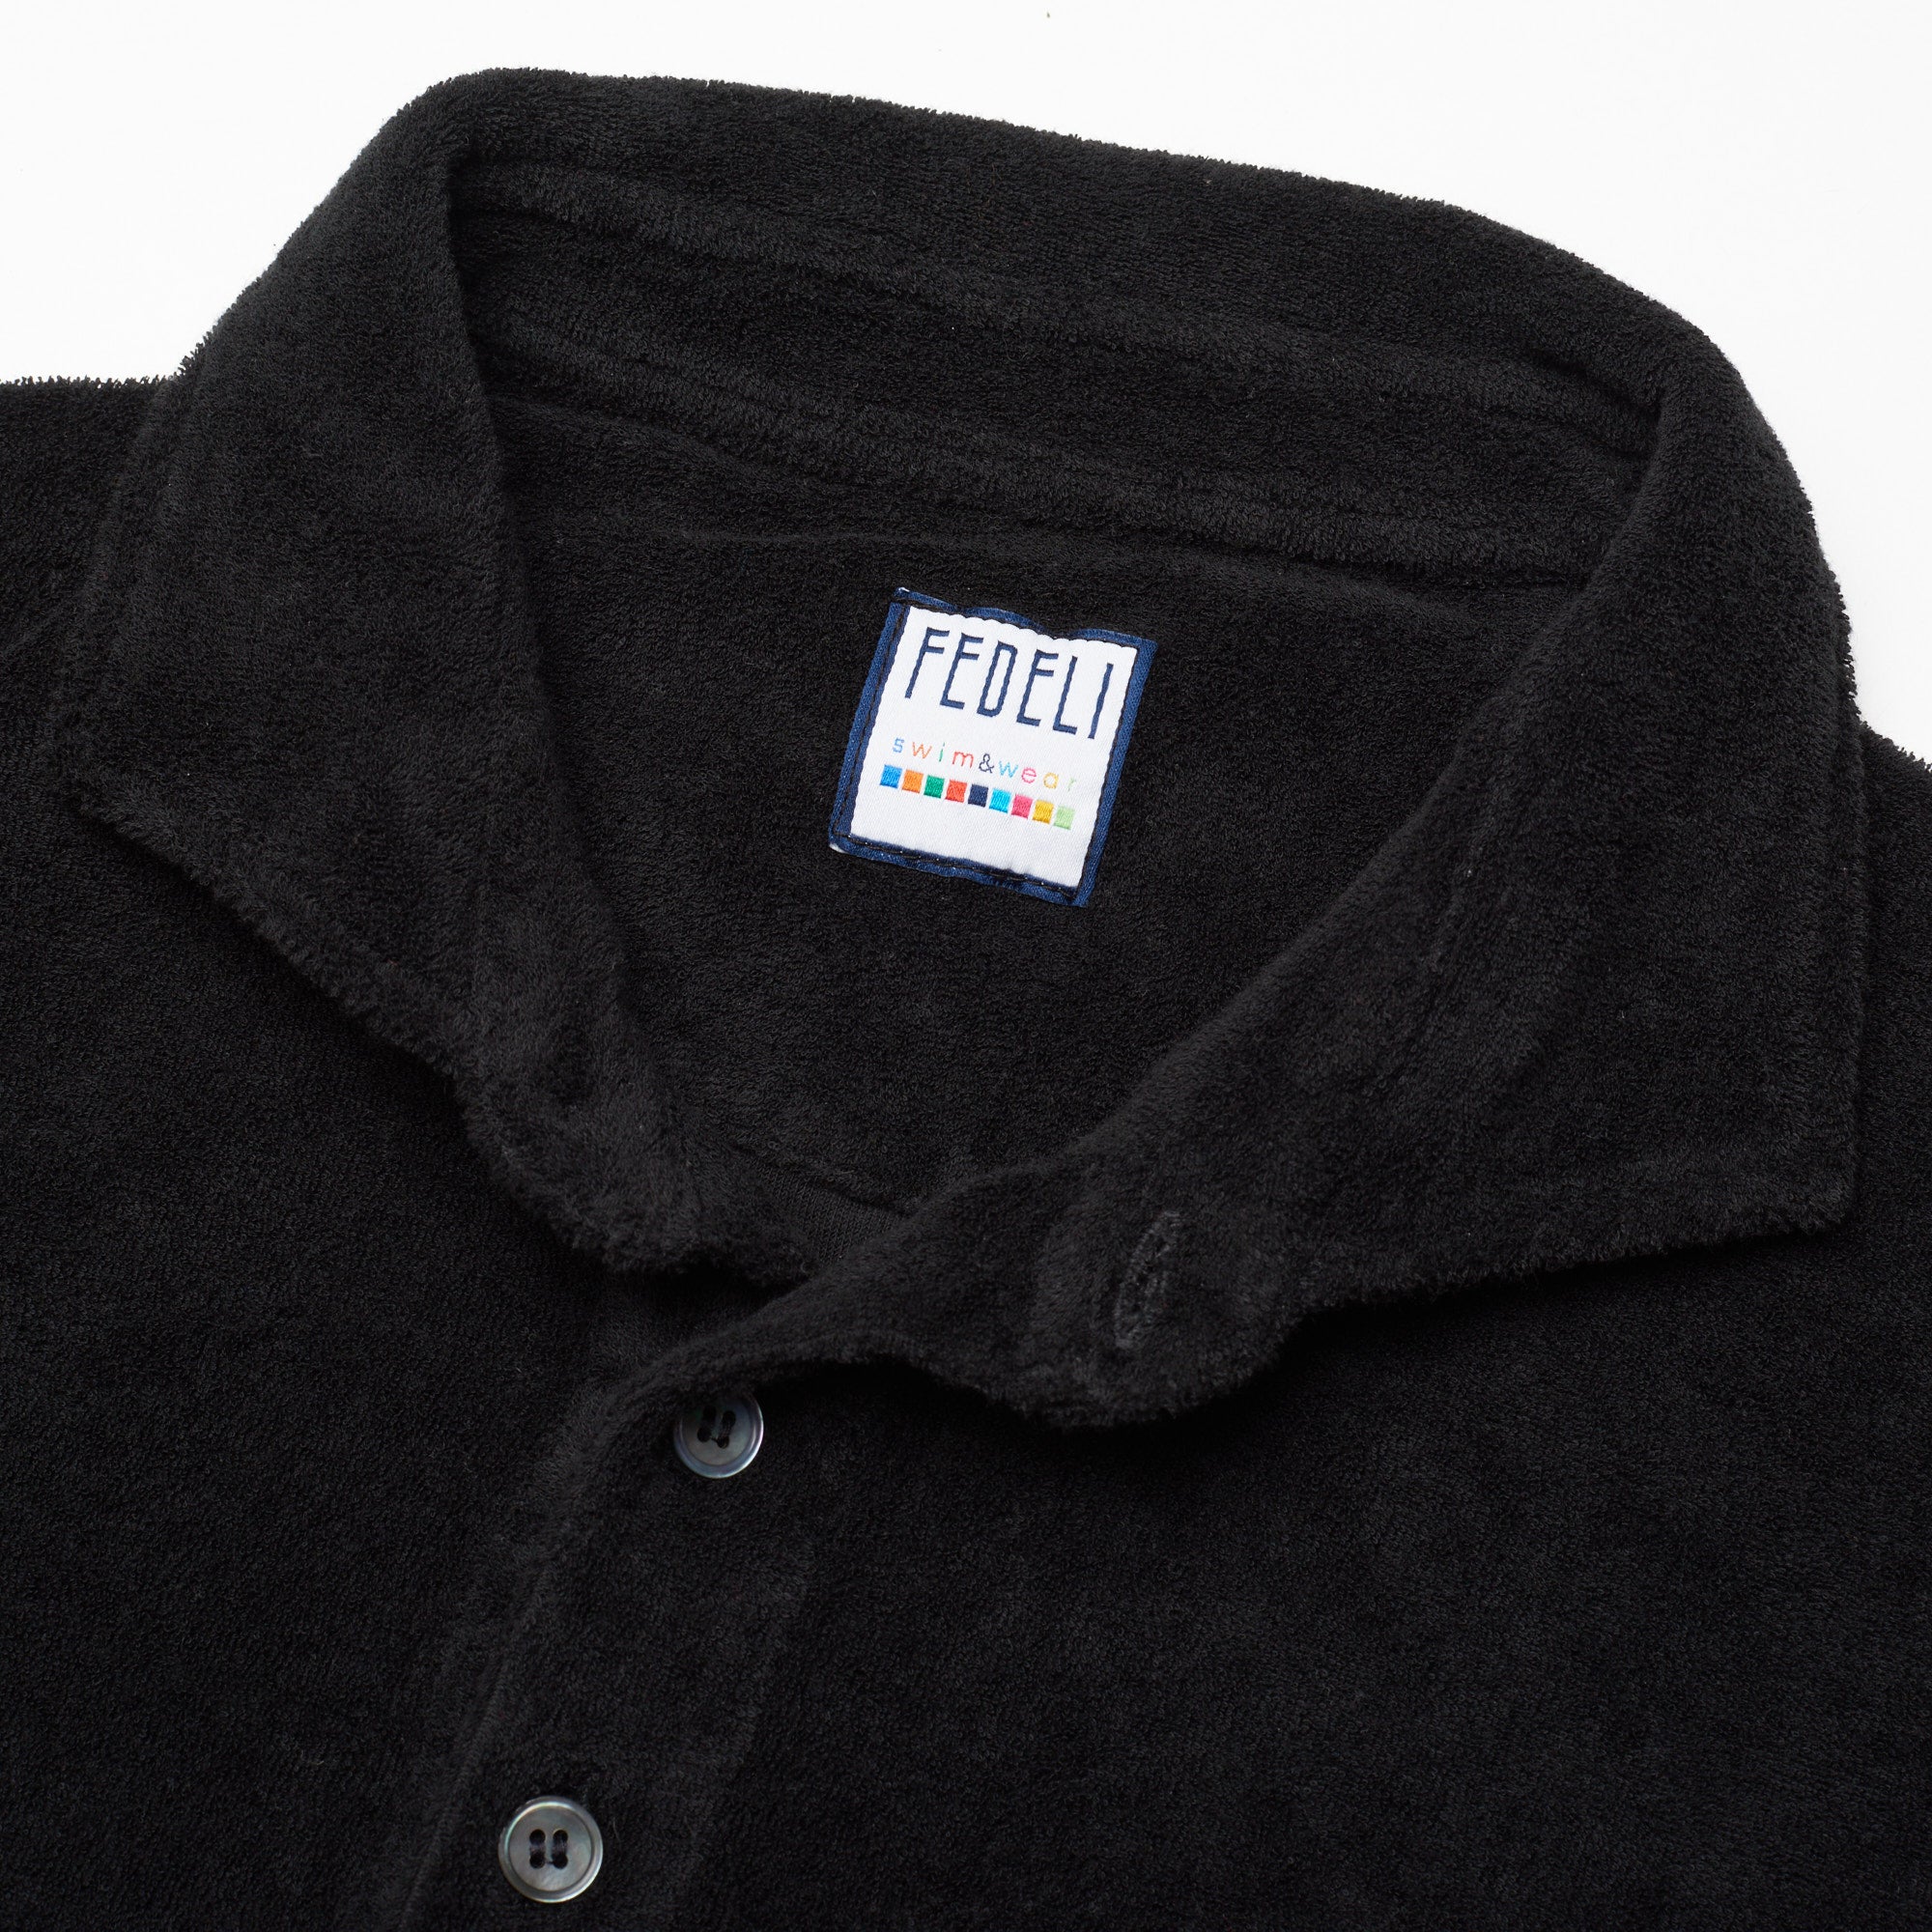 FEDELI "Ring" Black Terry Cloth Short Sleeve Polo Shirt NEW Slim Fit FEDELI